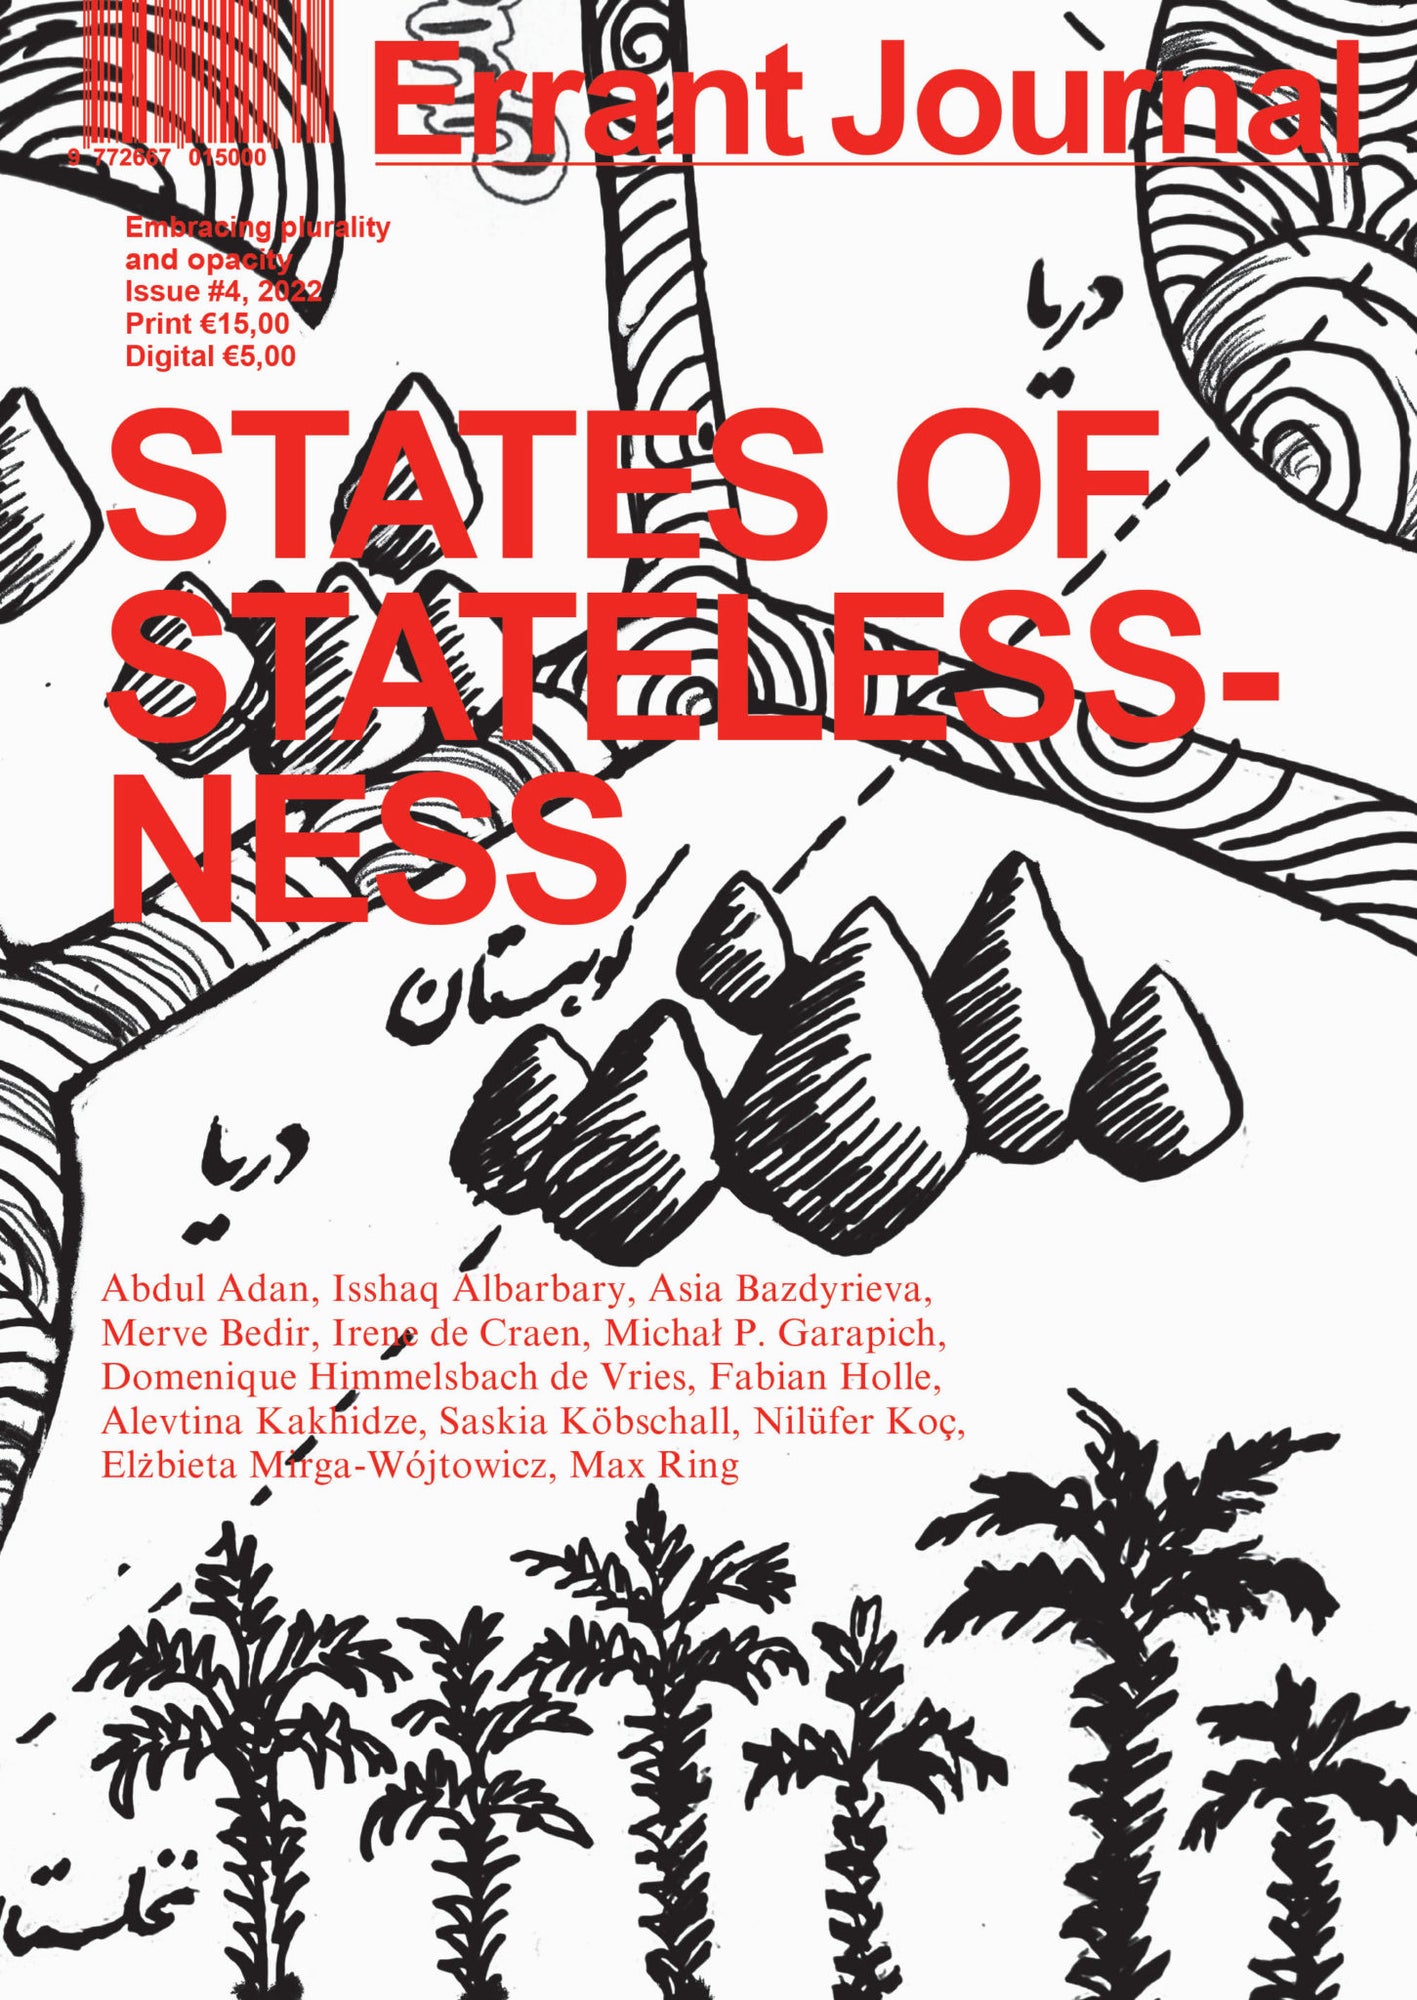 Errant Journal 4: States of Statelessness